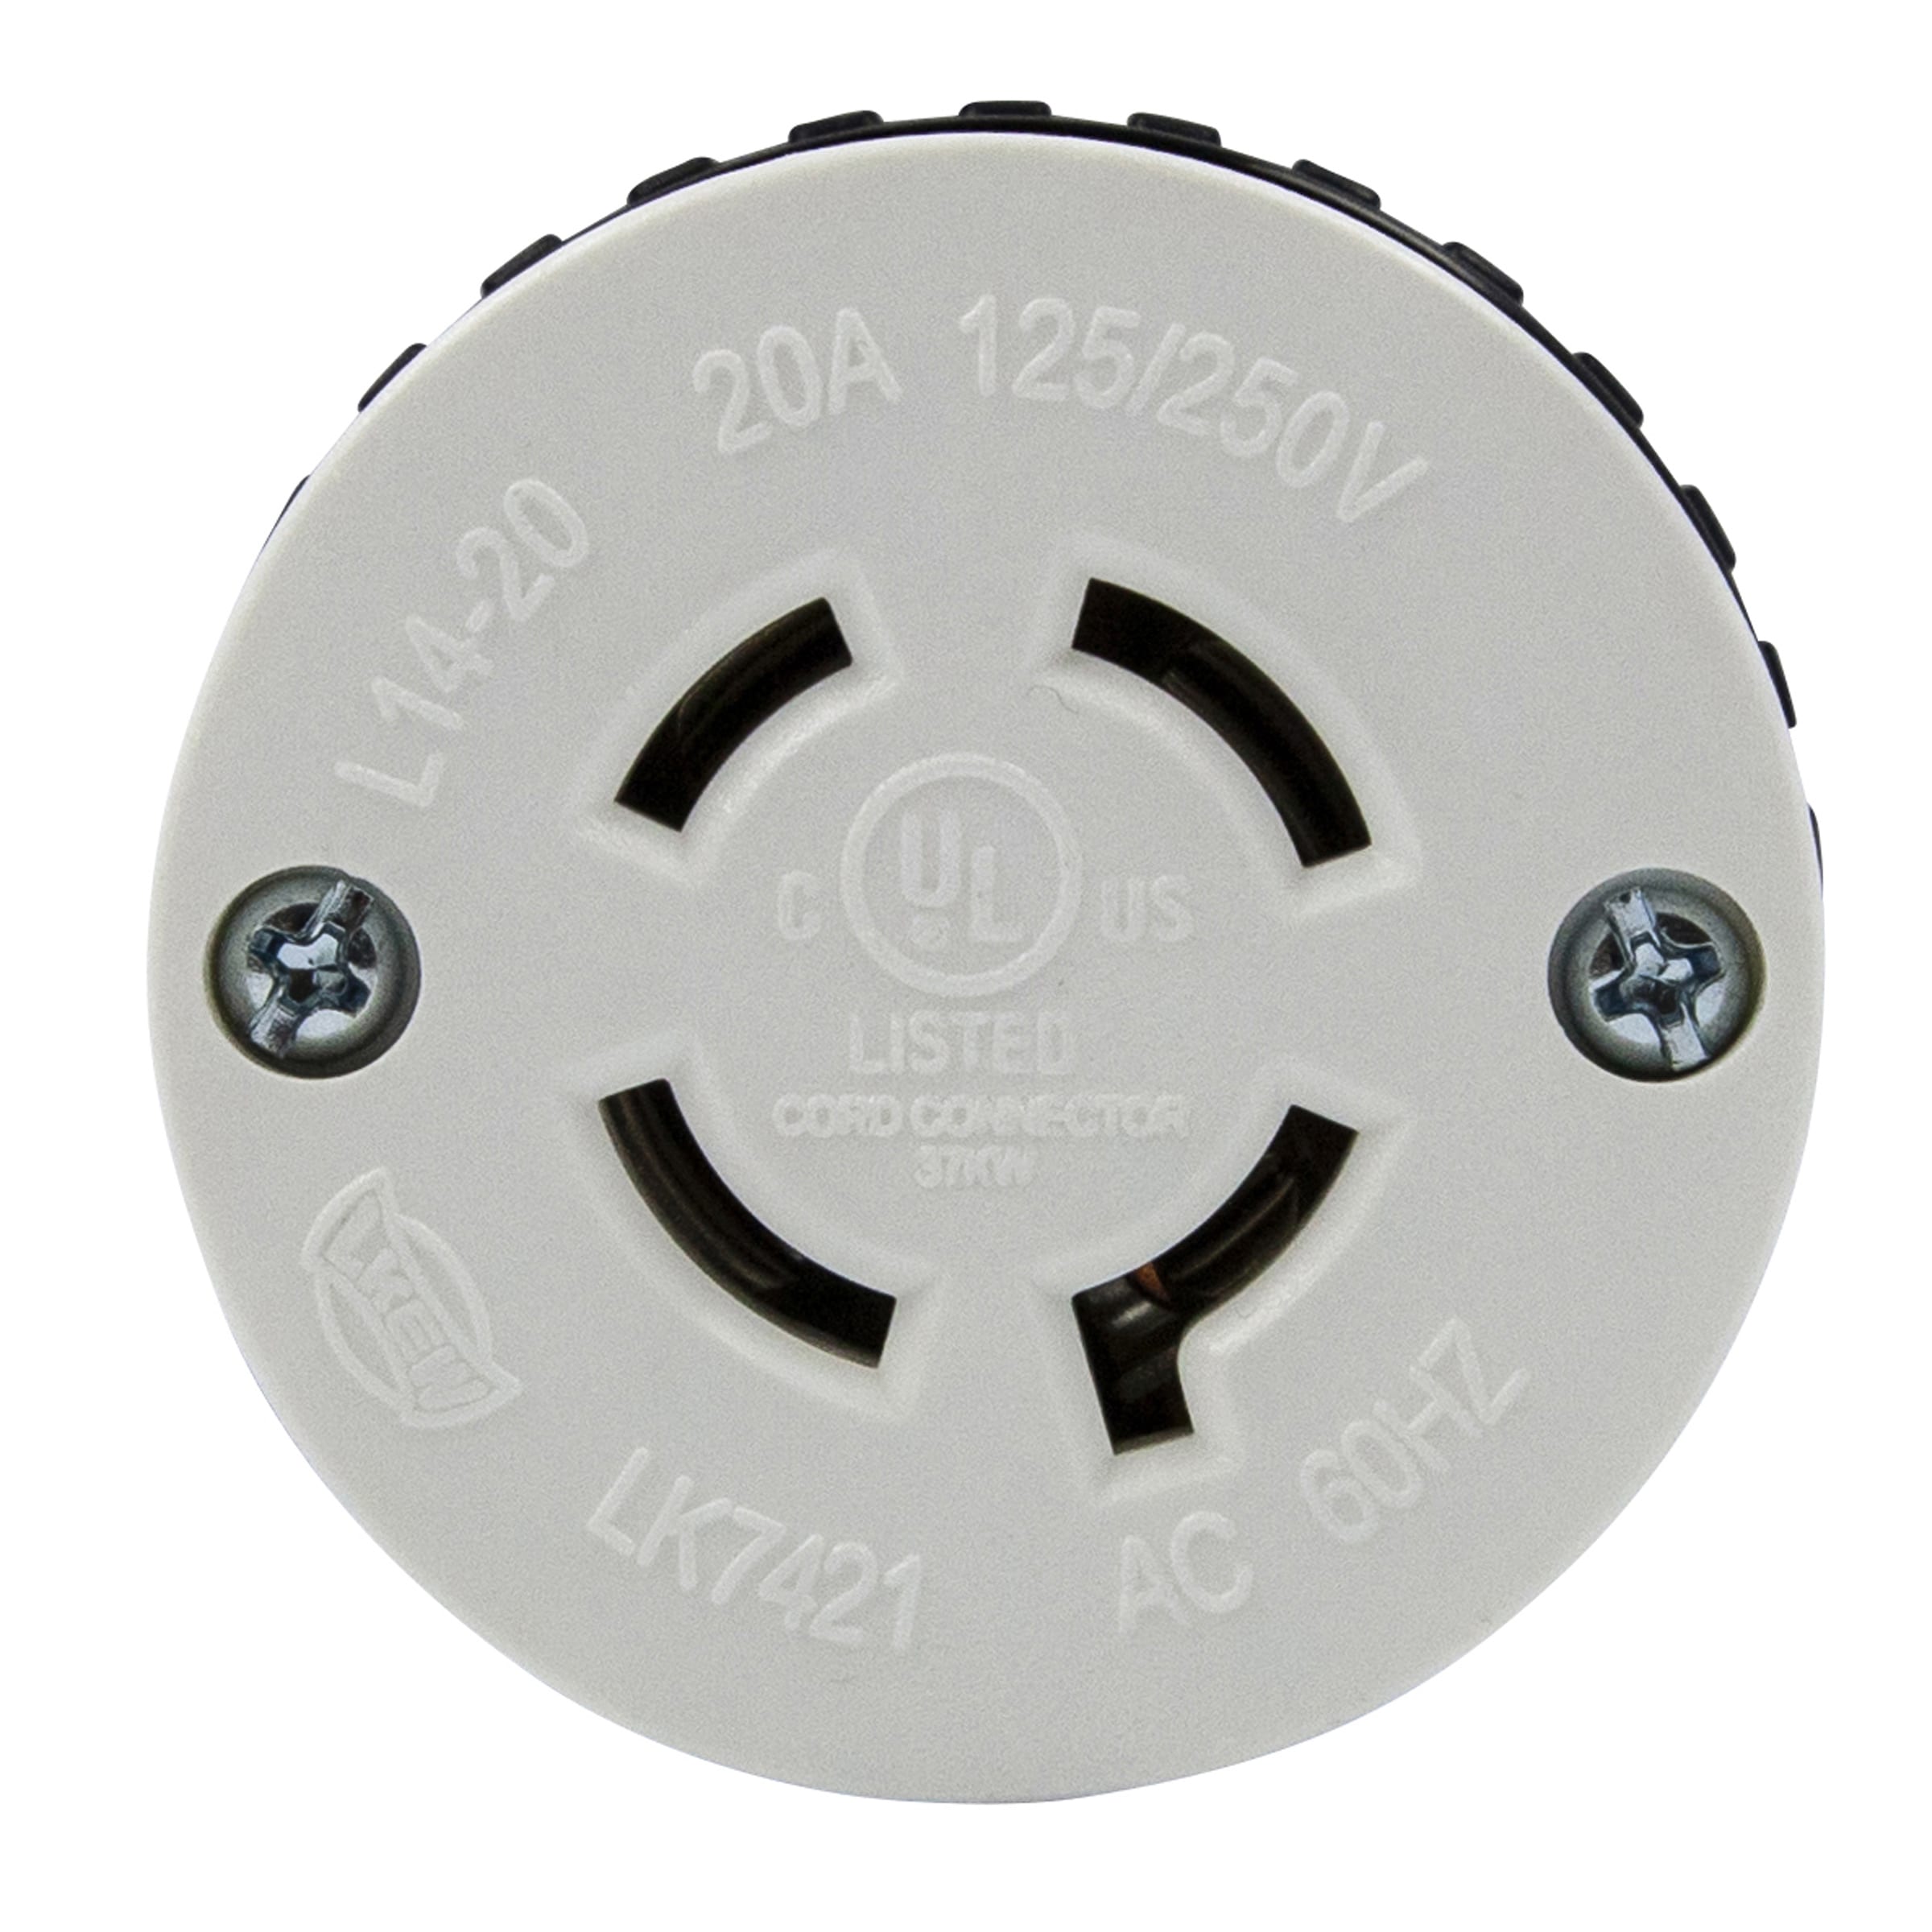 10 pc lot Heavy Duty L14-20C 4-Prong Twist Lock Locking Connector 20A 125/250V 